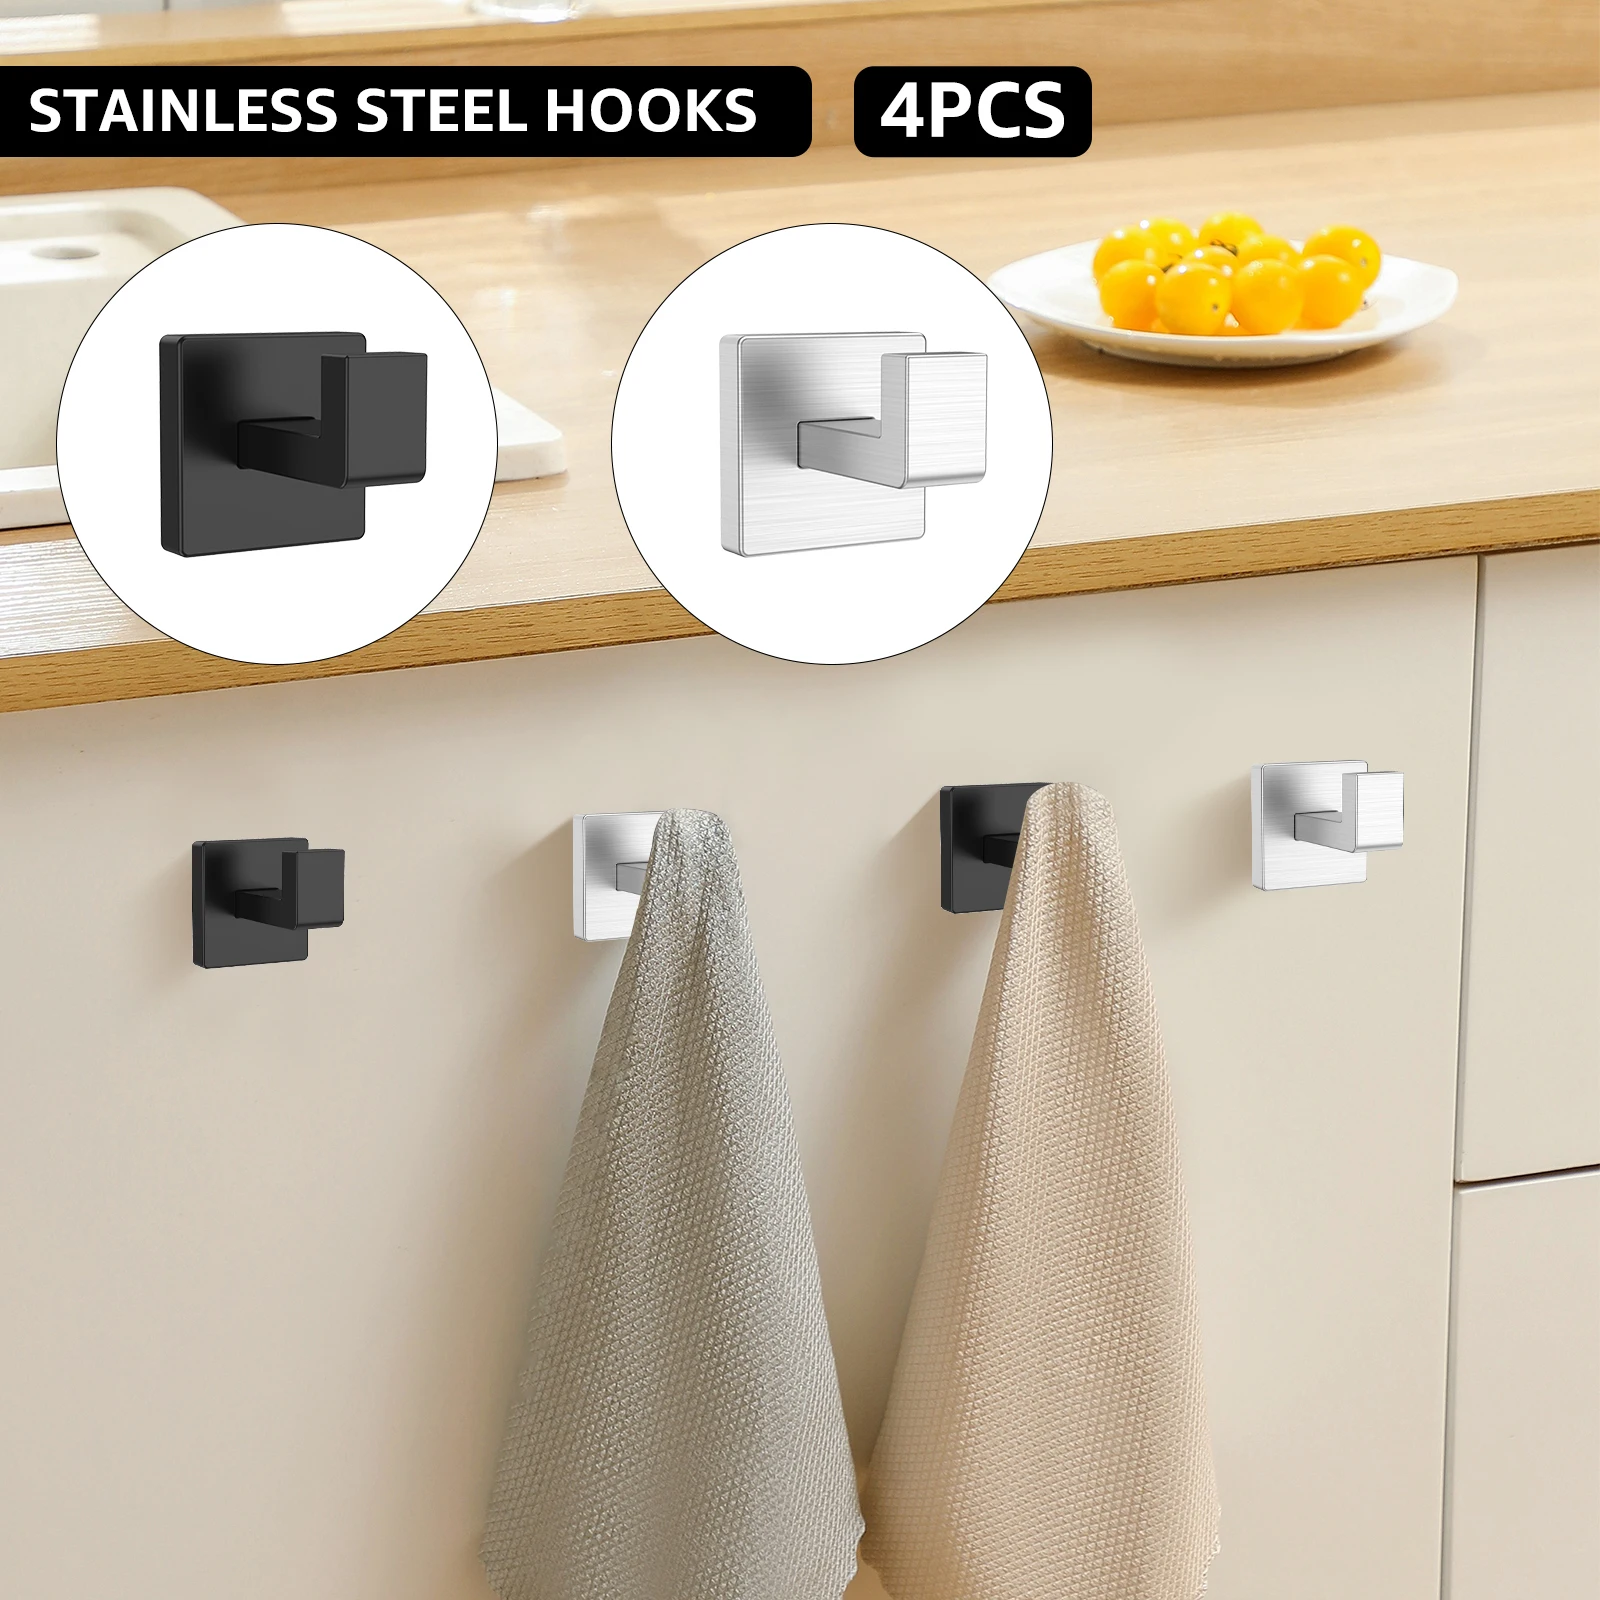 

2 Pcs Towel Hooks Stainless Steel Coat Hooks Wall Mounted Bathroom Towel Hook Creative Square Wall Hooks for Hanging Robe Bath